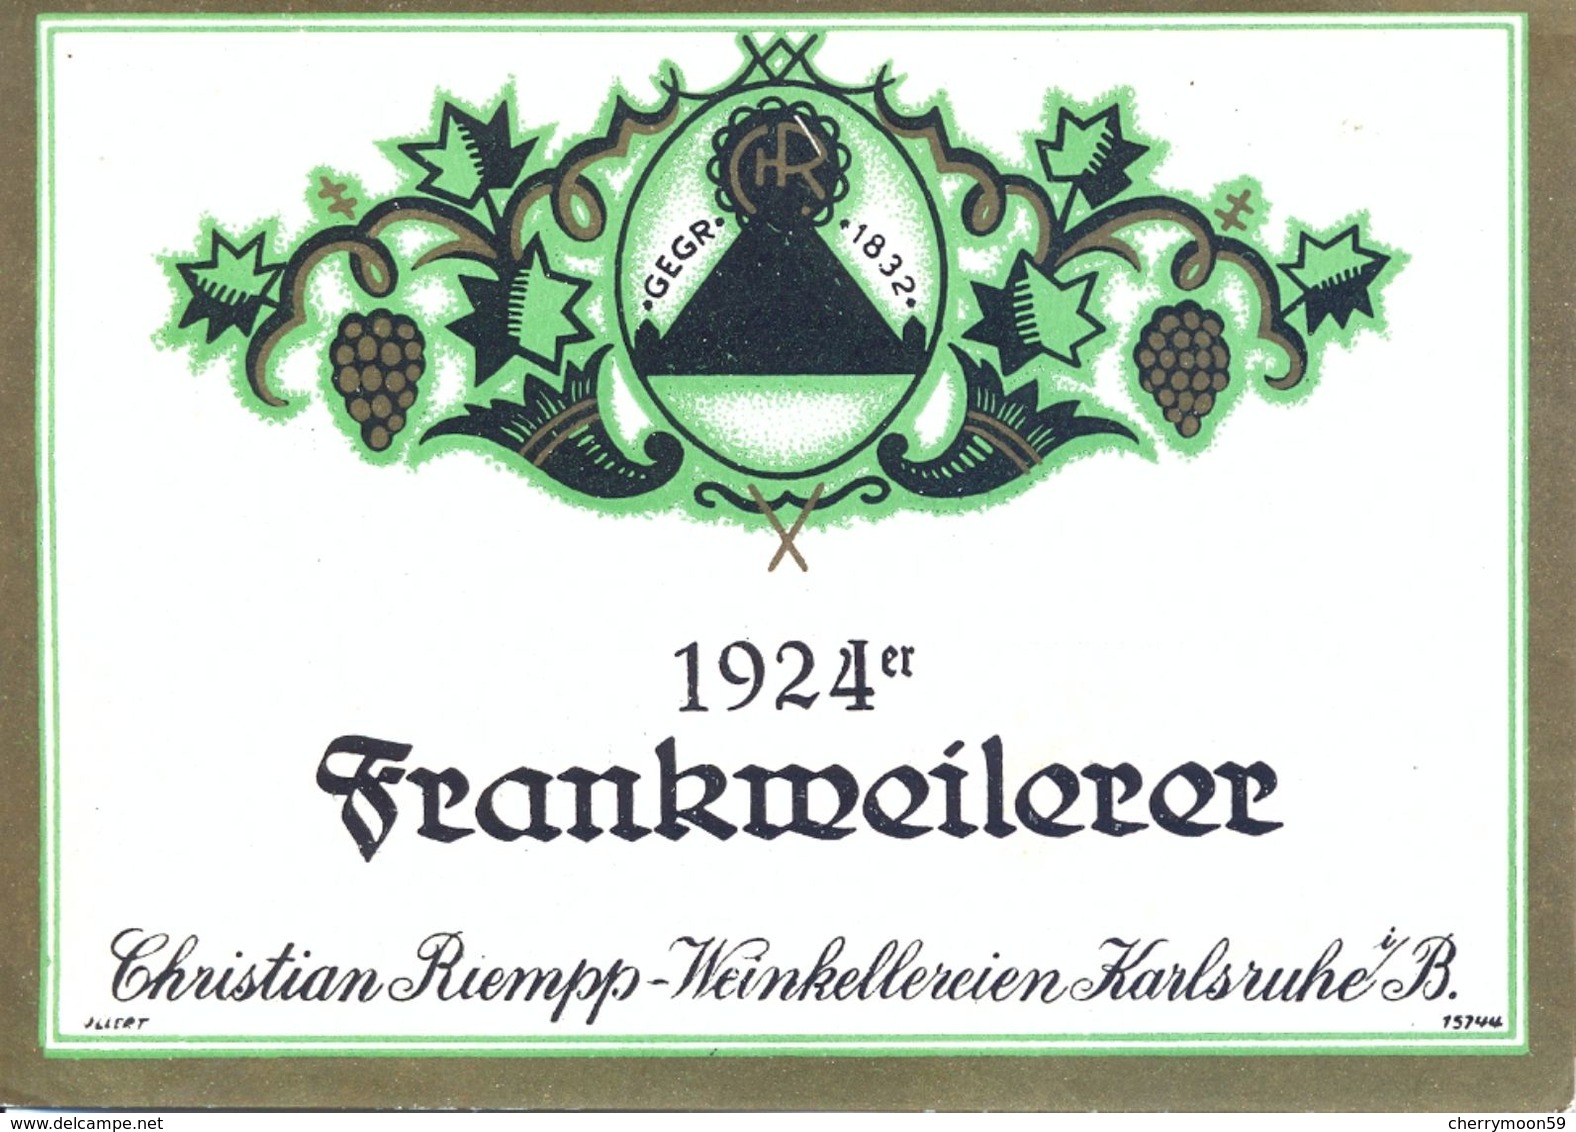 1 Etiquette Ancienne De VIN ALLEMAND - FRANKMEILERER - 1924 - CHRISTIAN RIEMPP - WEINKELLEREIEN KARLSRUHE - Riesling